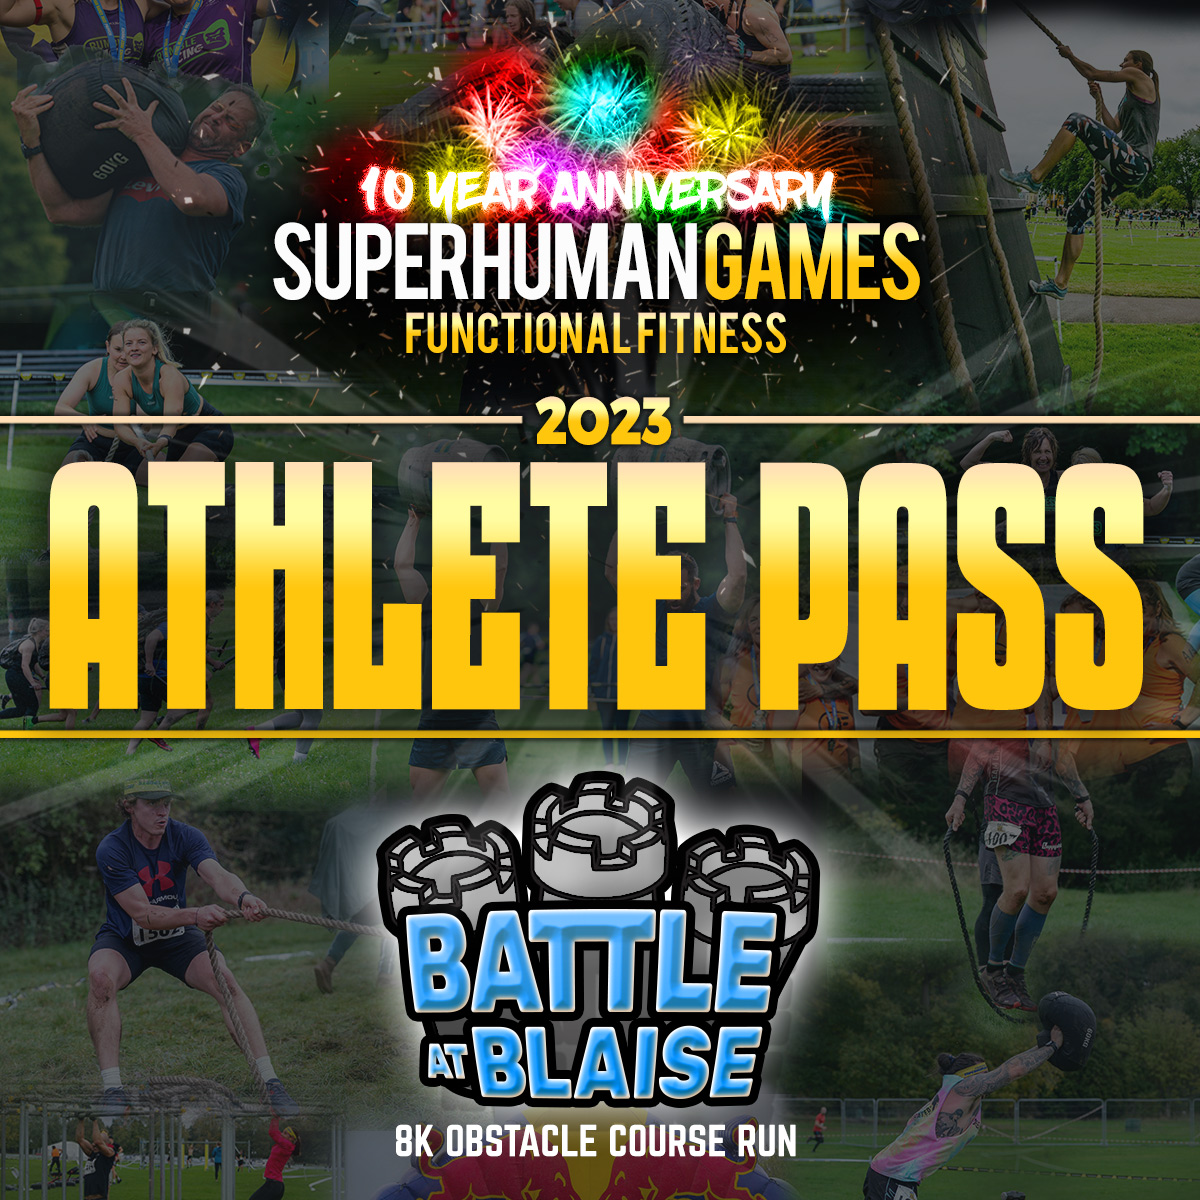 Superhuman Athlete Pass